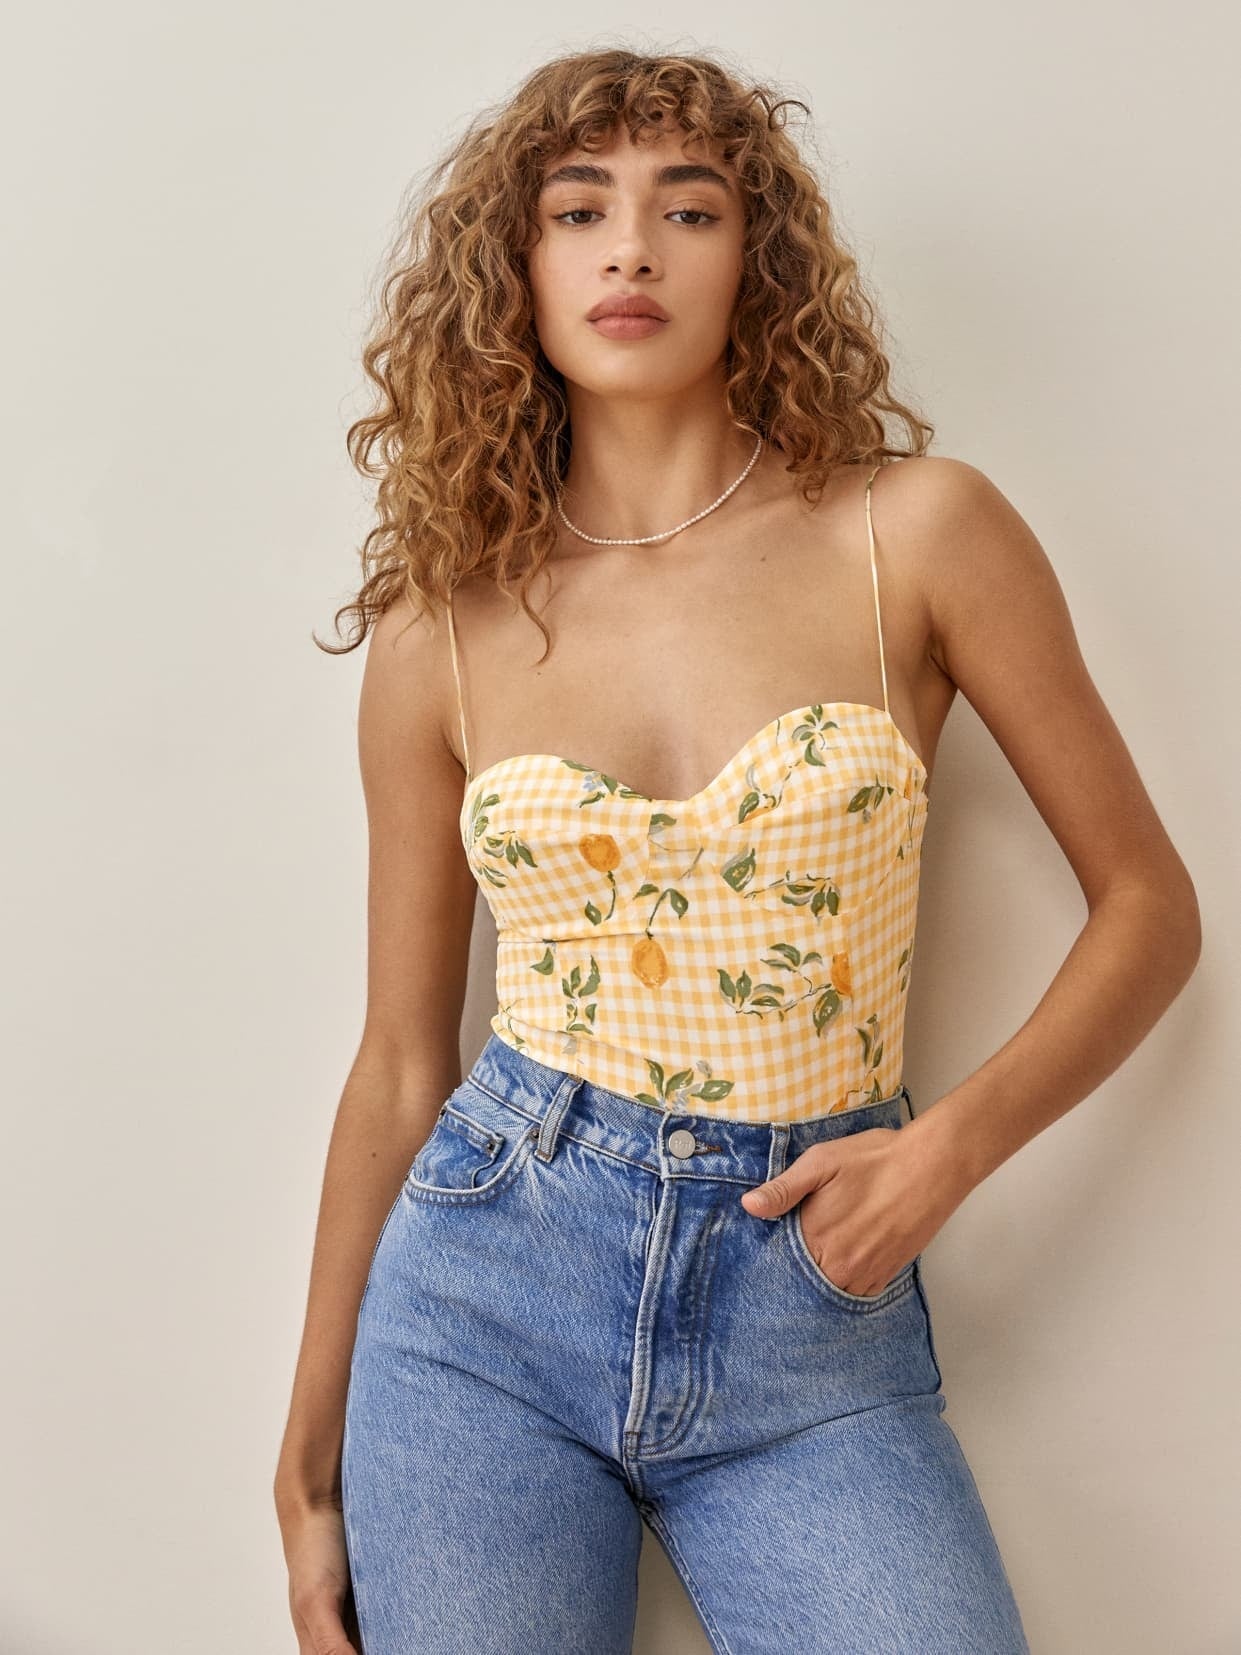 Dileoo Summer Top Spaghetti Strap Fashion Back Elastic Zipper Women Camis Vintage Yellow Tartan Floral Print Tank Top